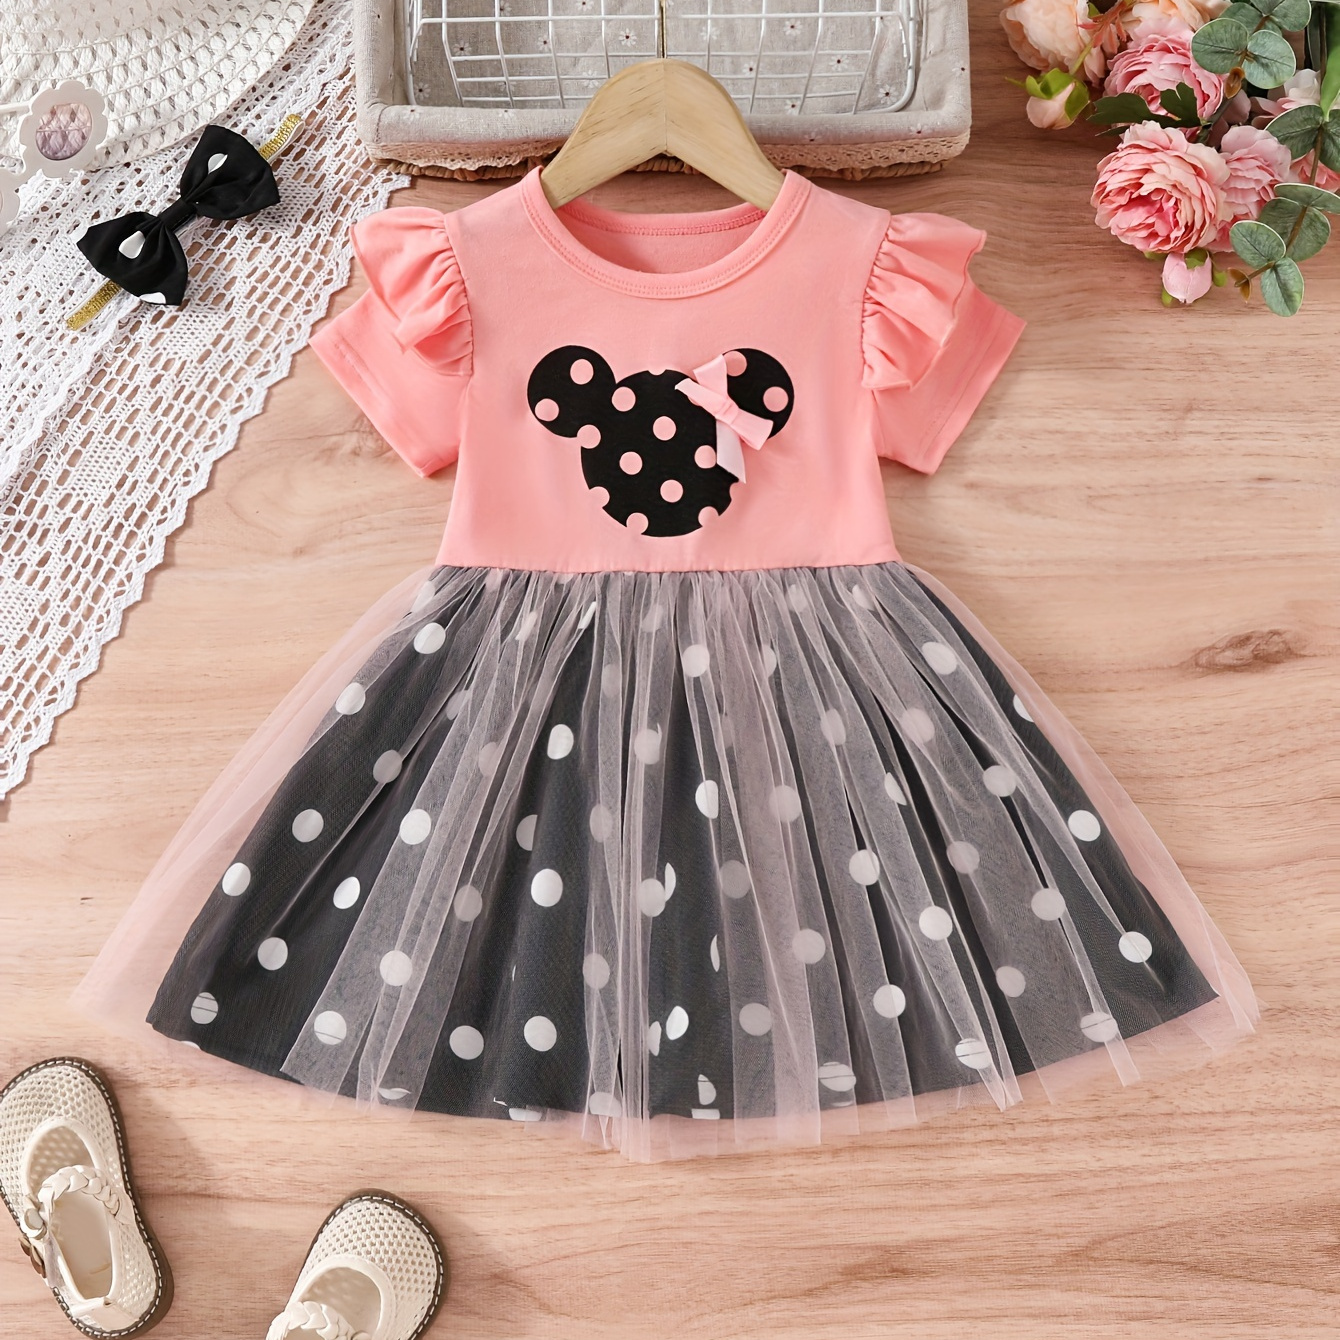 

Baby's Lovely Polka Dots Pattern Mesh Splicing Dress, Short Sleeve Princess Dress, Infant & Toddler Girl's Clothing For Summer/spring, As Gift